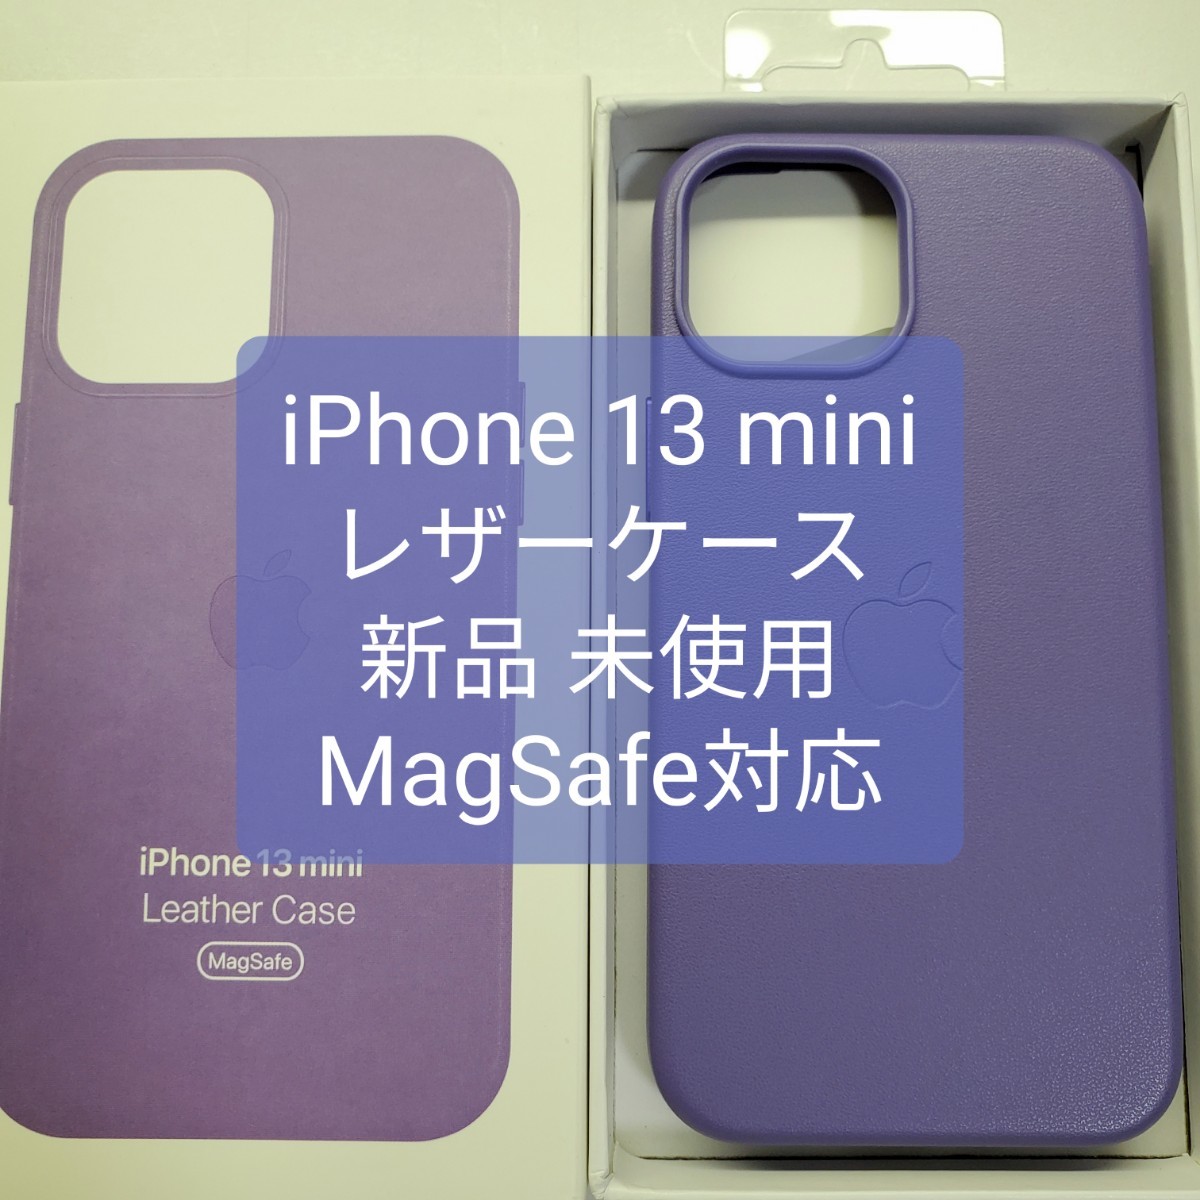 iPhone 13 mini ケース レザーケース Magsafe 対応 ウィステリア 